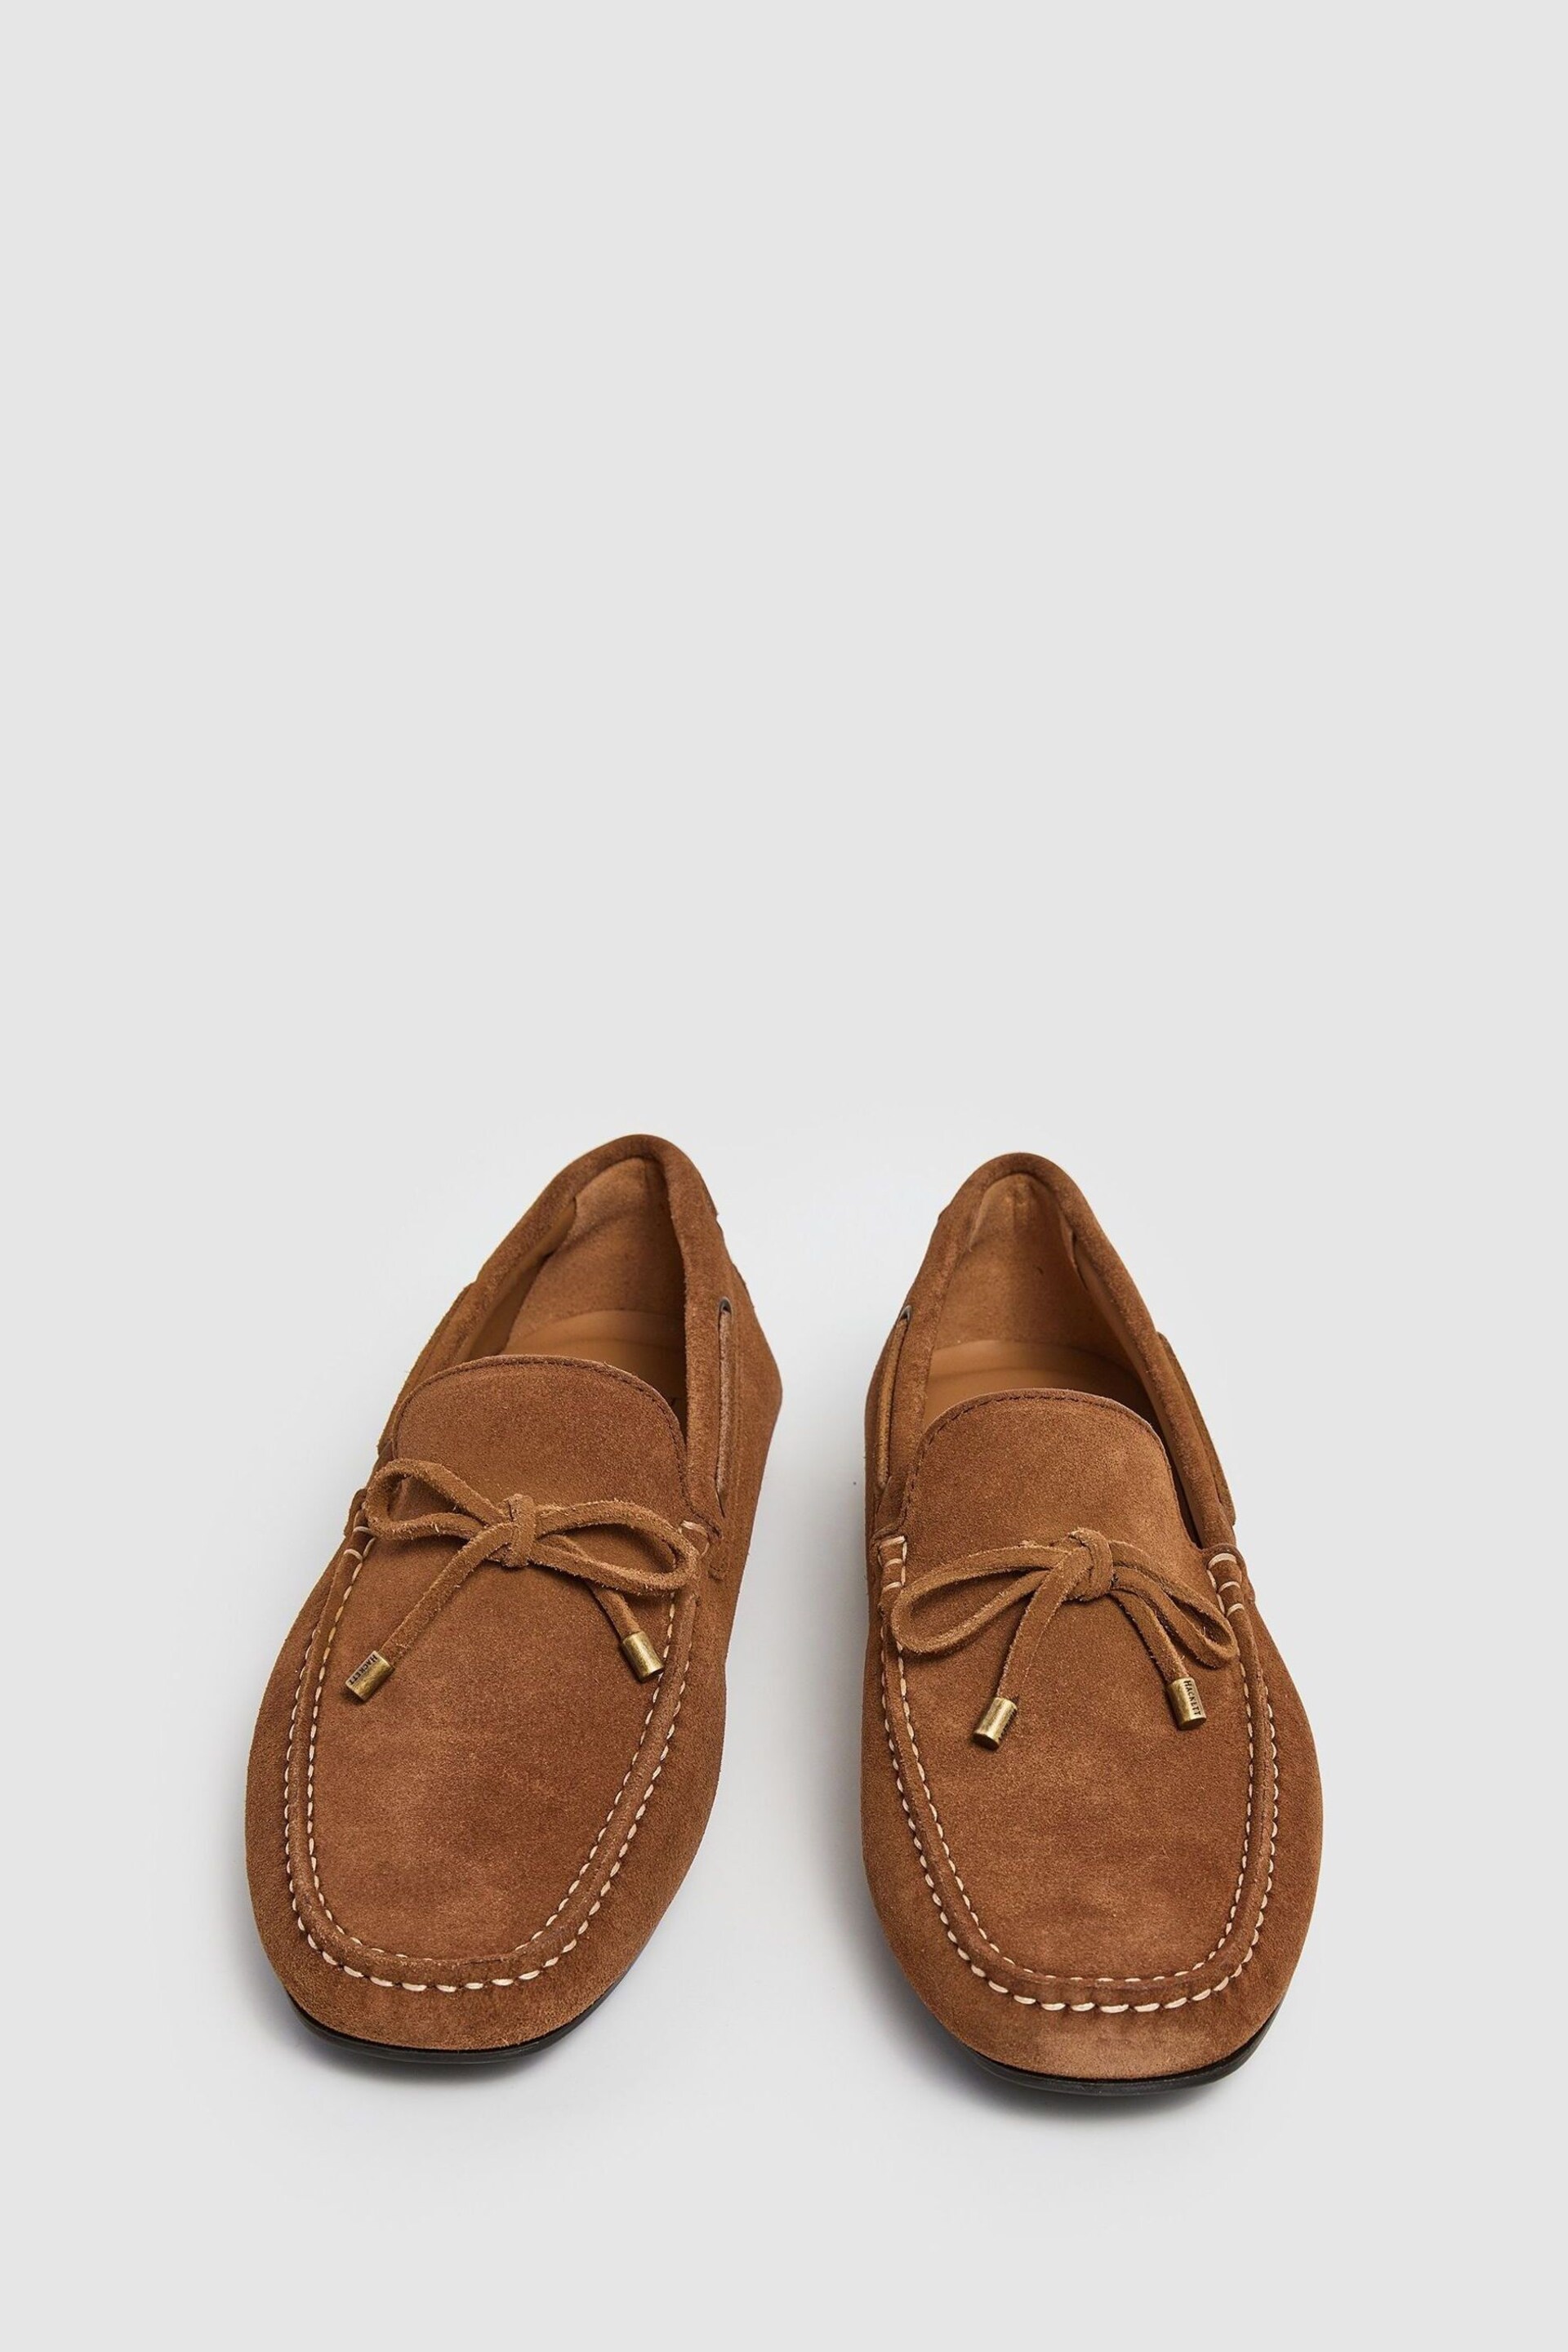 Hackett London Men Regular Brown Shoes - Image 3 of 6